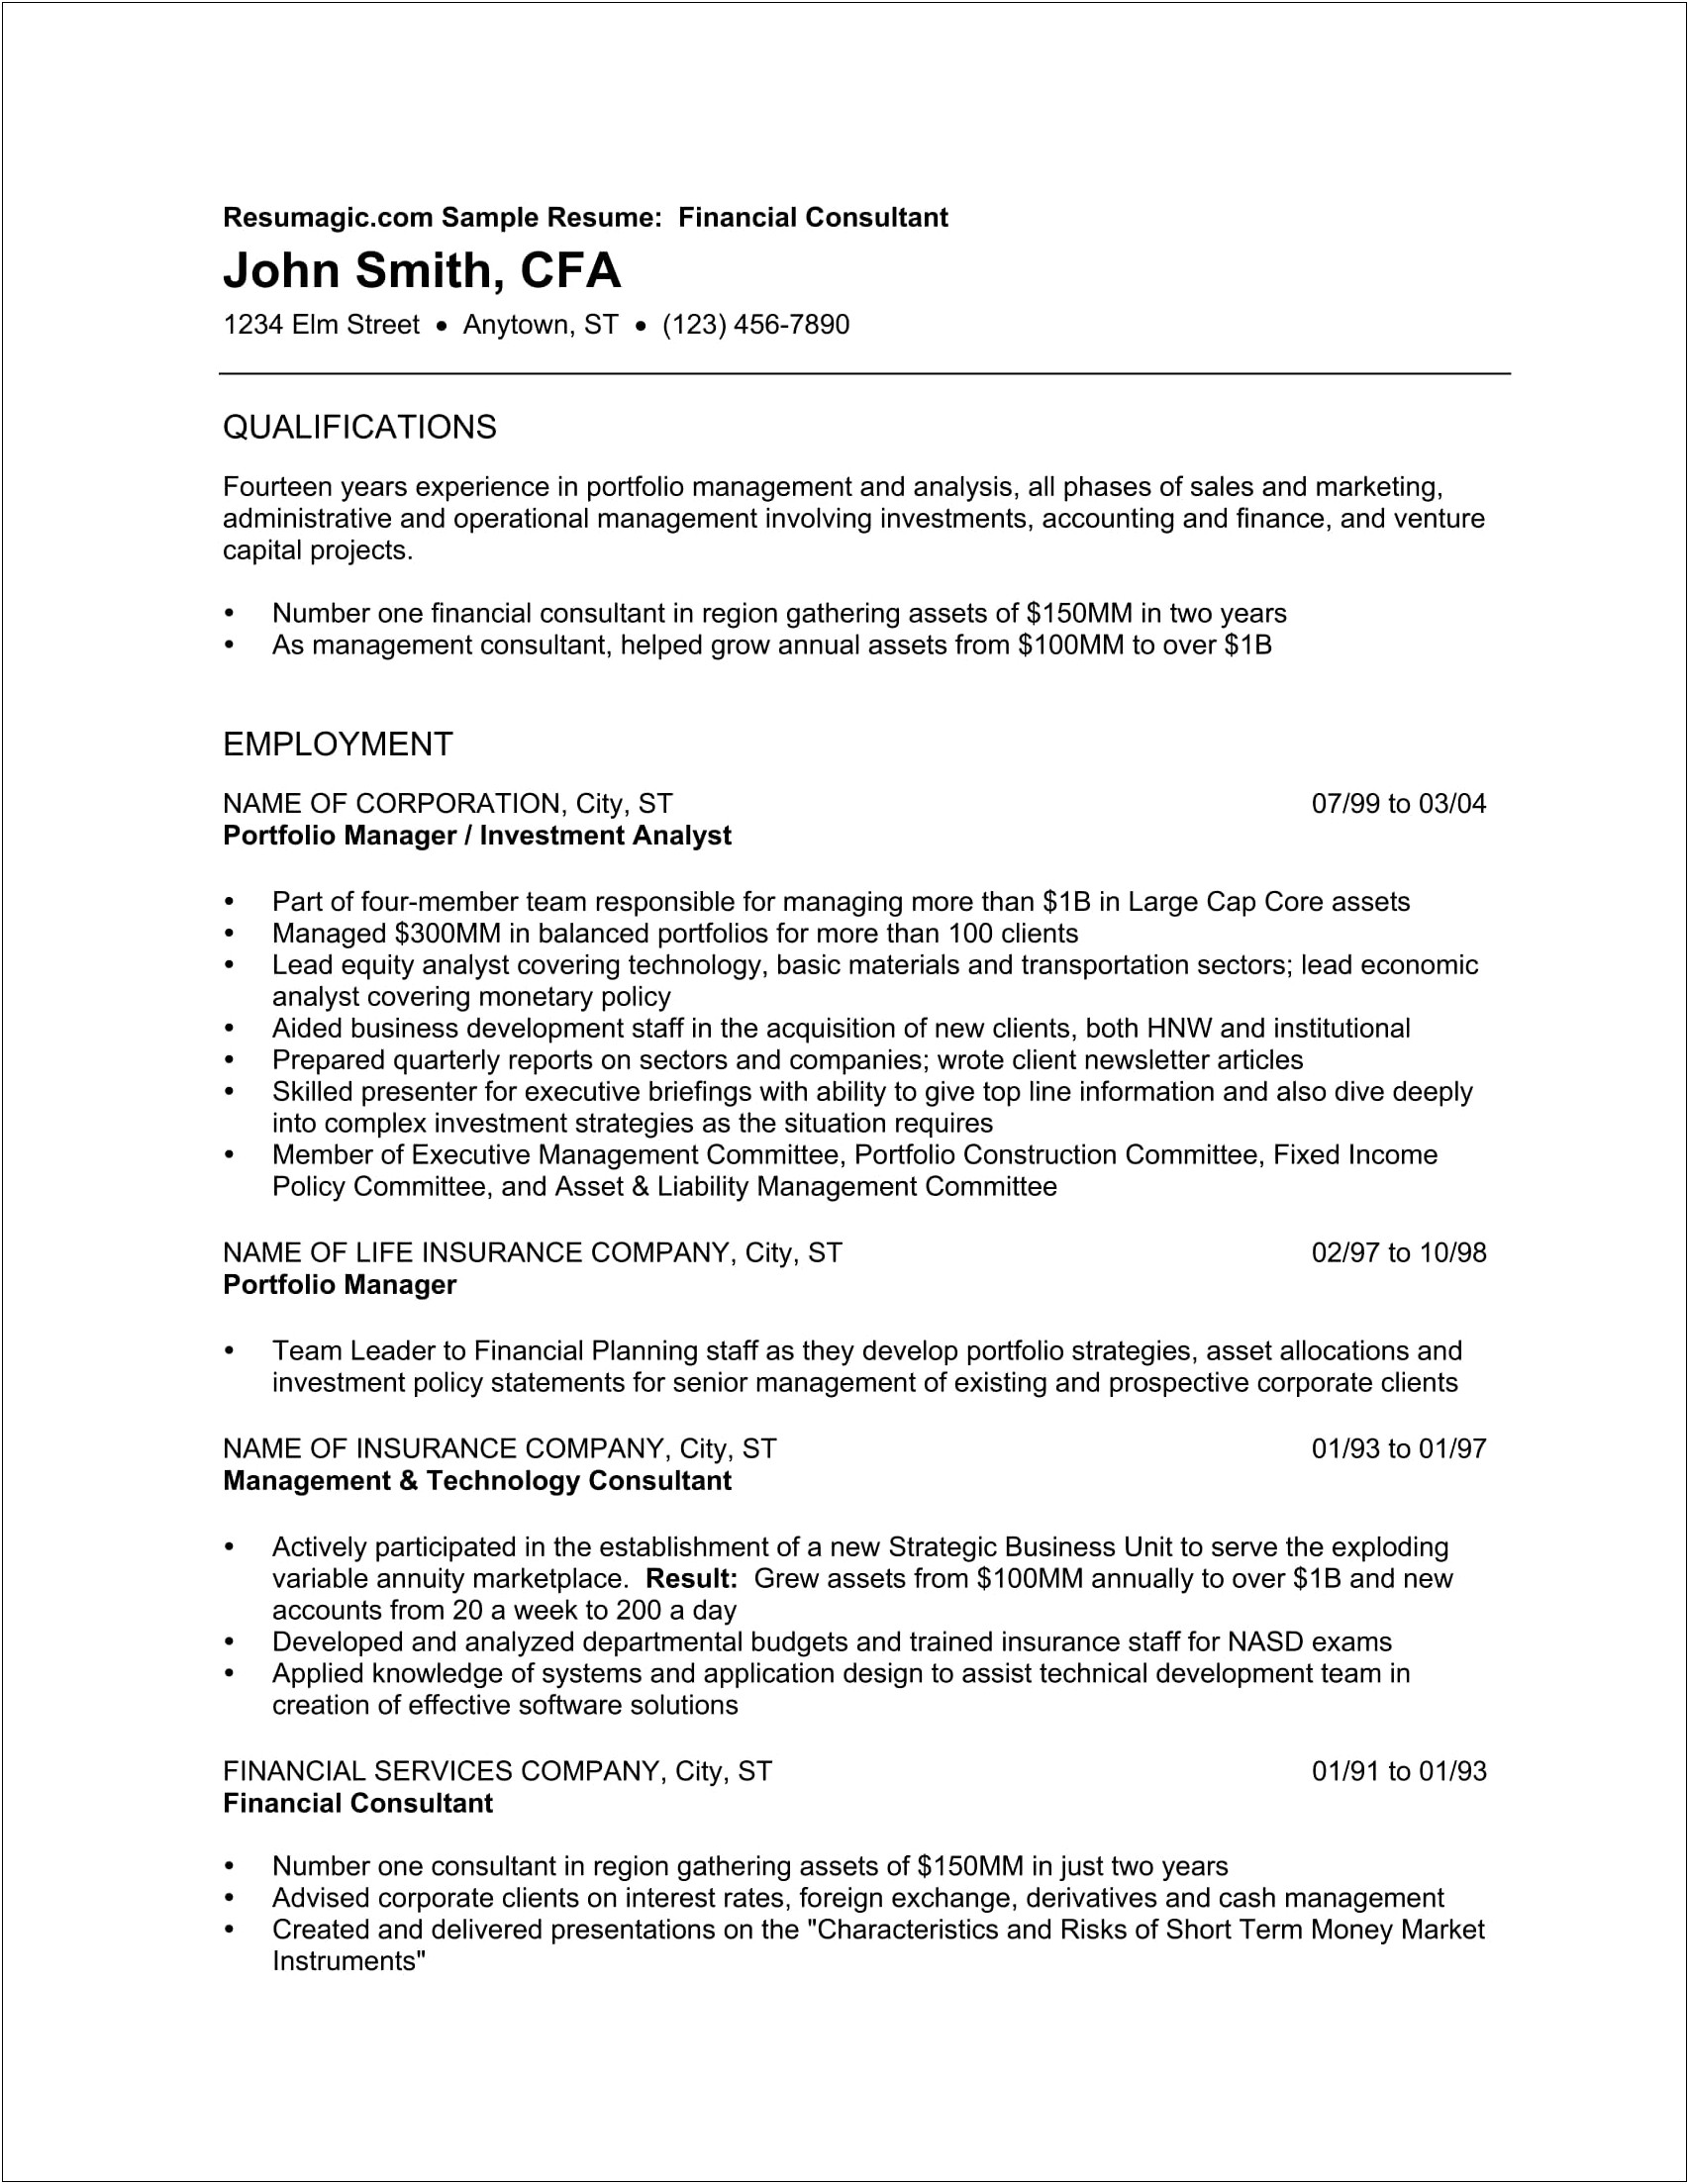 Sample Resume For Venture Capital Analyst